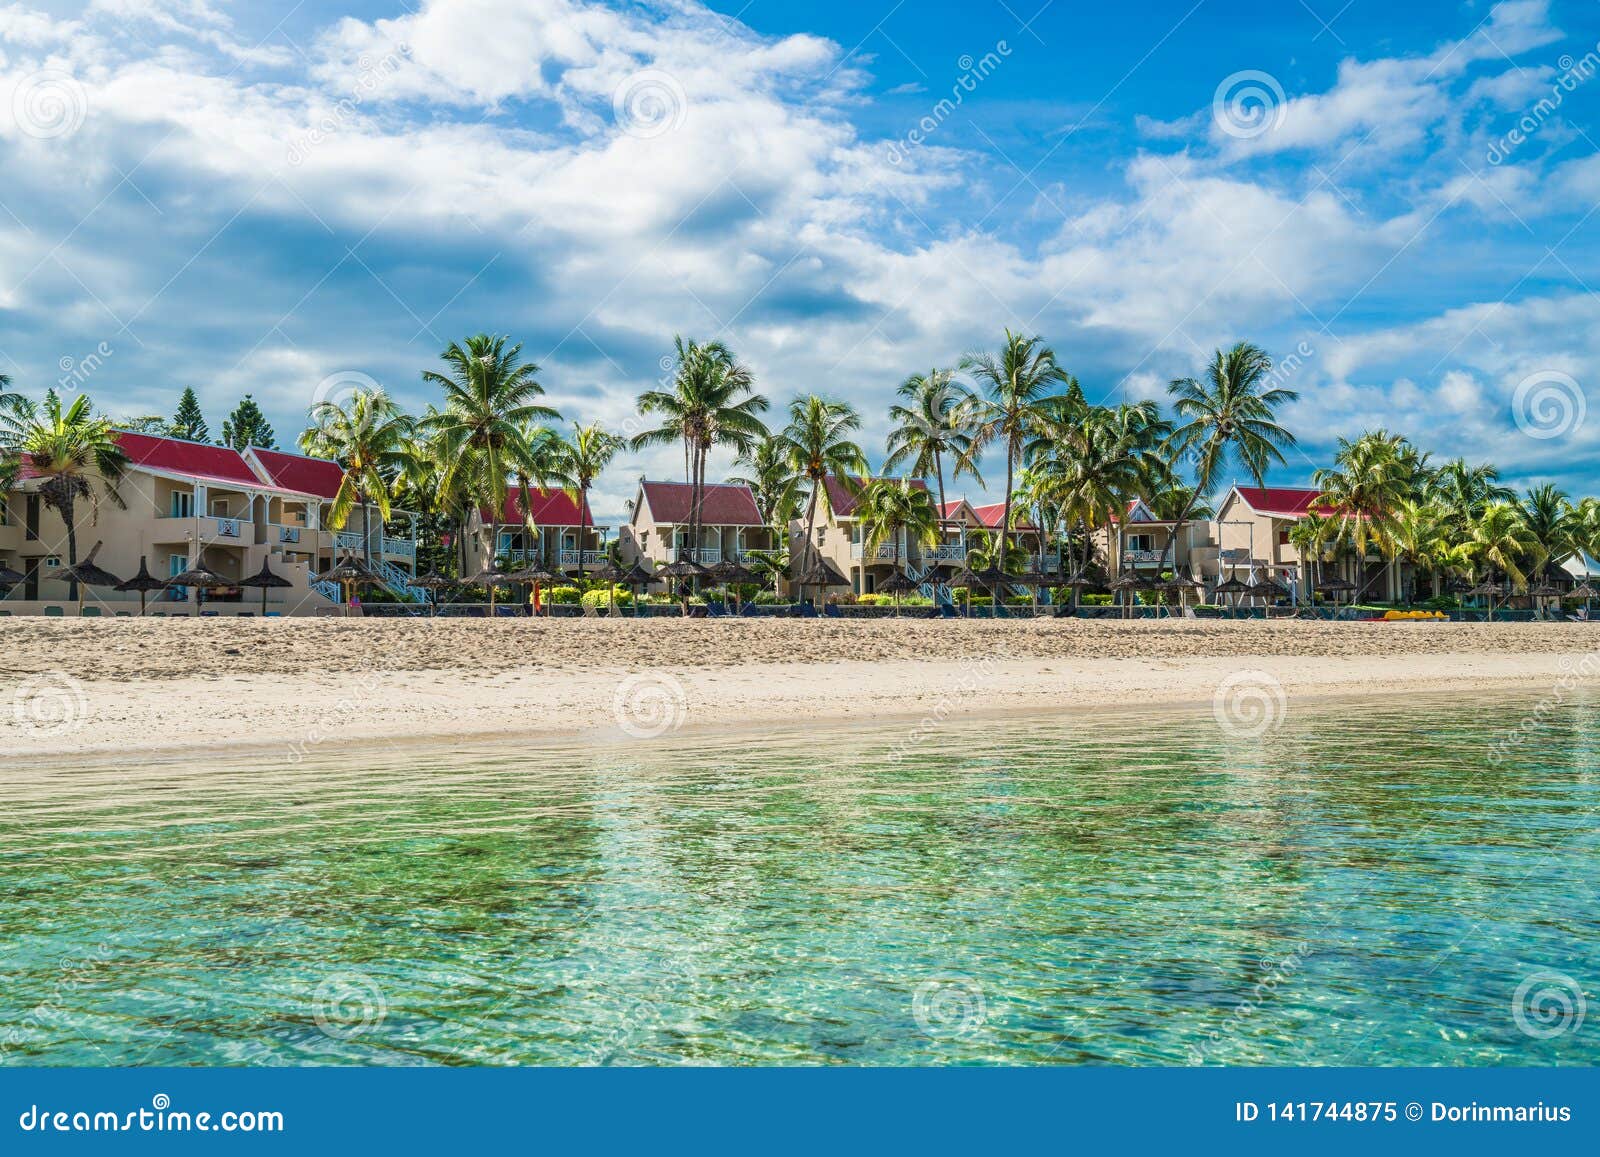 flick and flac beach, mauritius